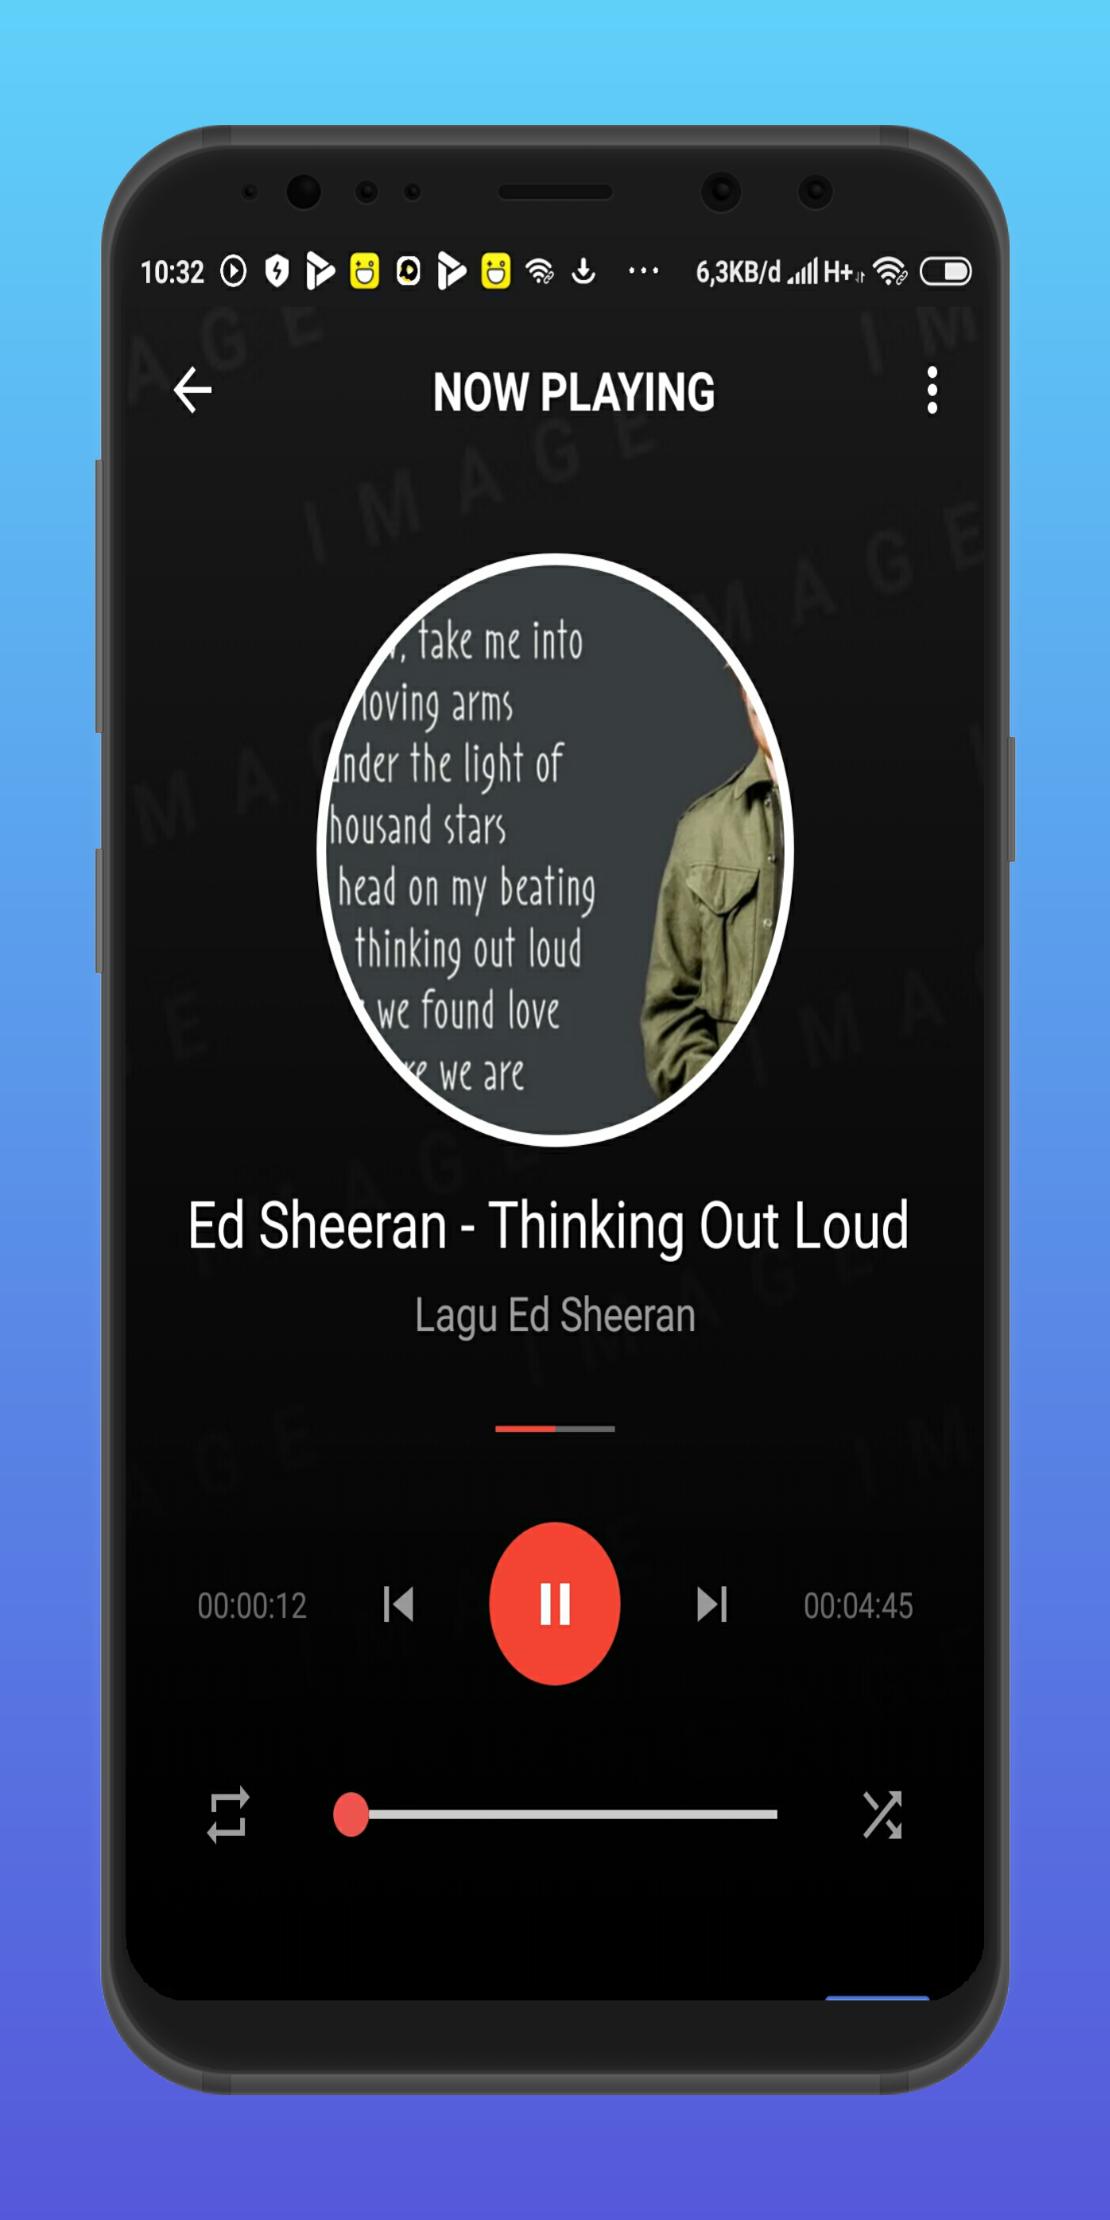 Ed Sheeran Songs Offline Latest Full Album 2021 APK for Android Download